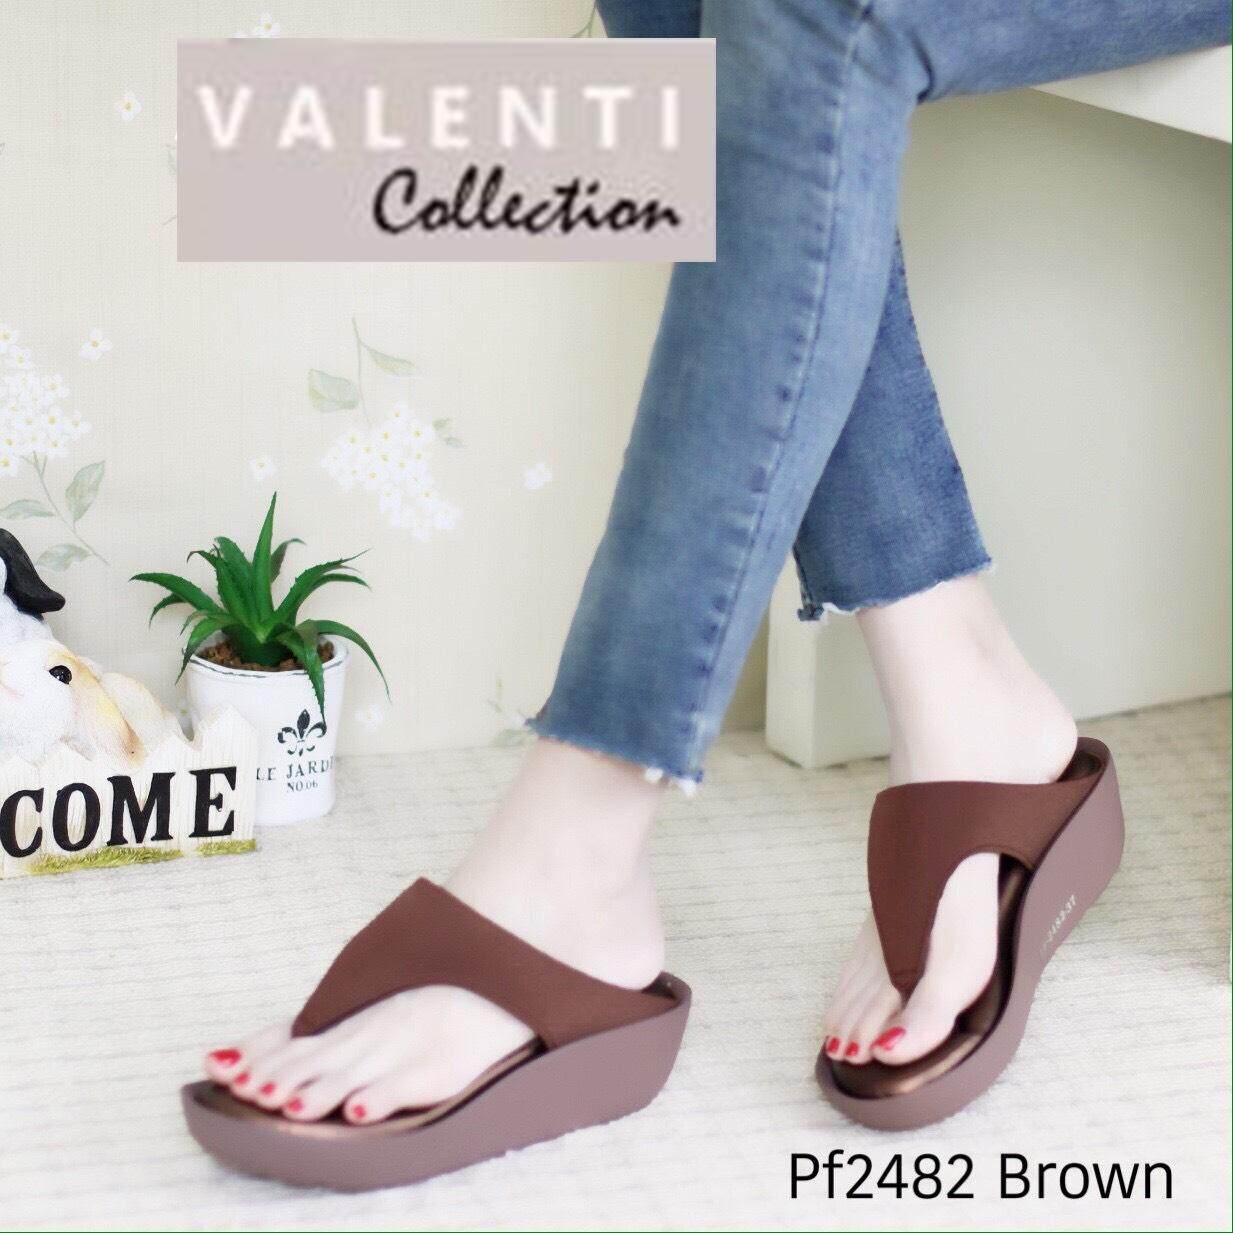 Valenti Collection รองเท้าเพื่อสุขภาพ Health & massage Therapy super soft SOFASHOES รุ่นขายดี นุ่มมาก เบา ใส่สบาย รุ่น PF2482 Brown (สีน้ำตาล)